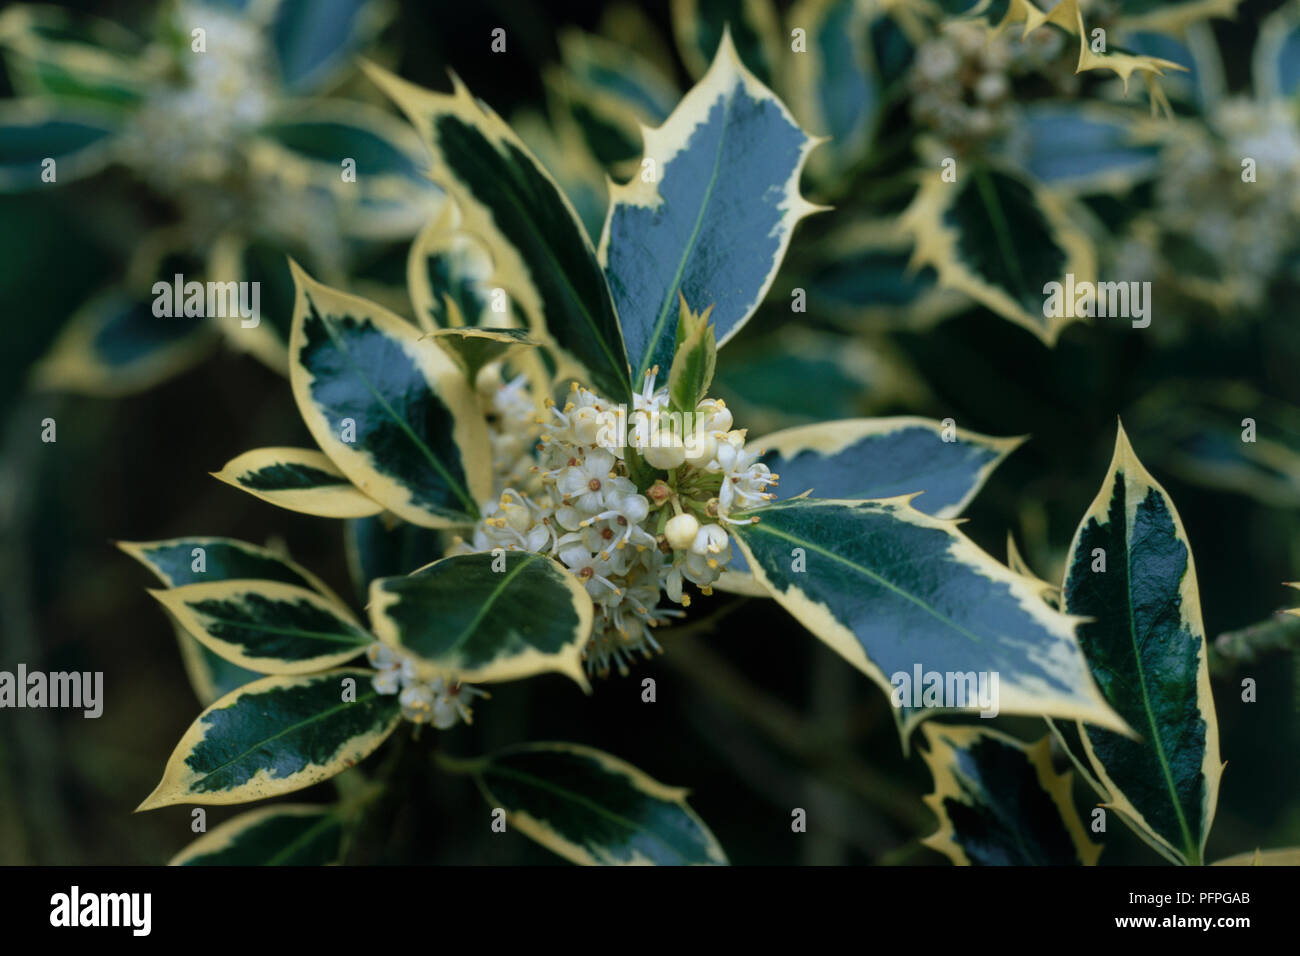 Ilex aquifolium 'Argentea Marginata' (Holly), cluster of flowers, and green and yellow leaves, close-up Stock Photo